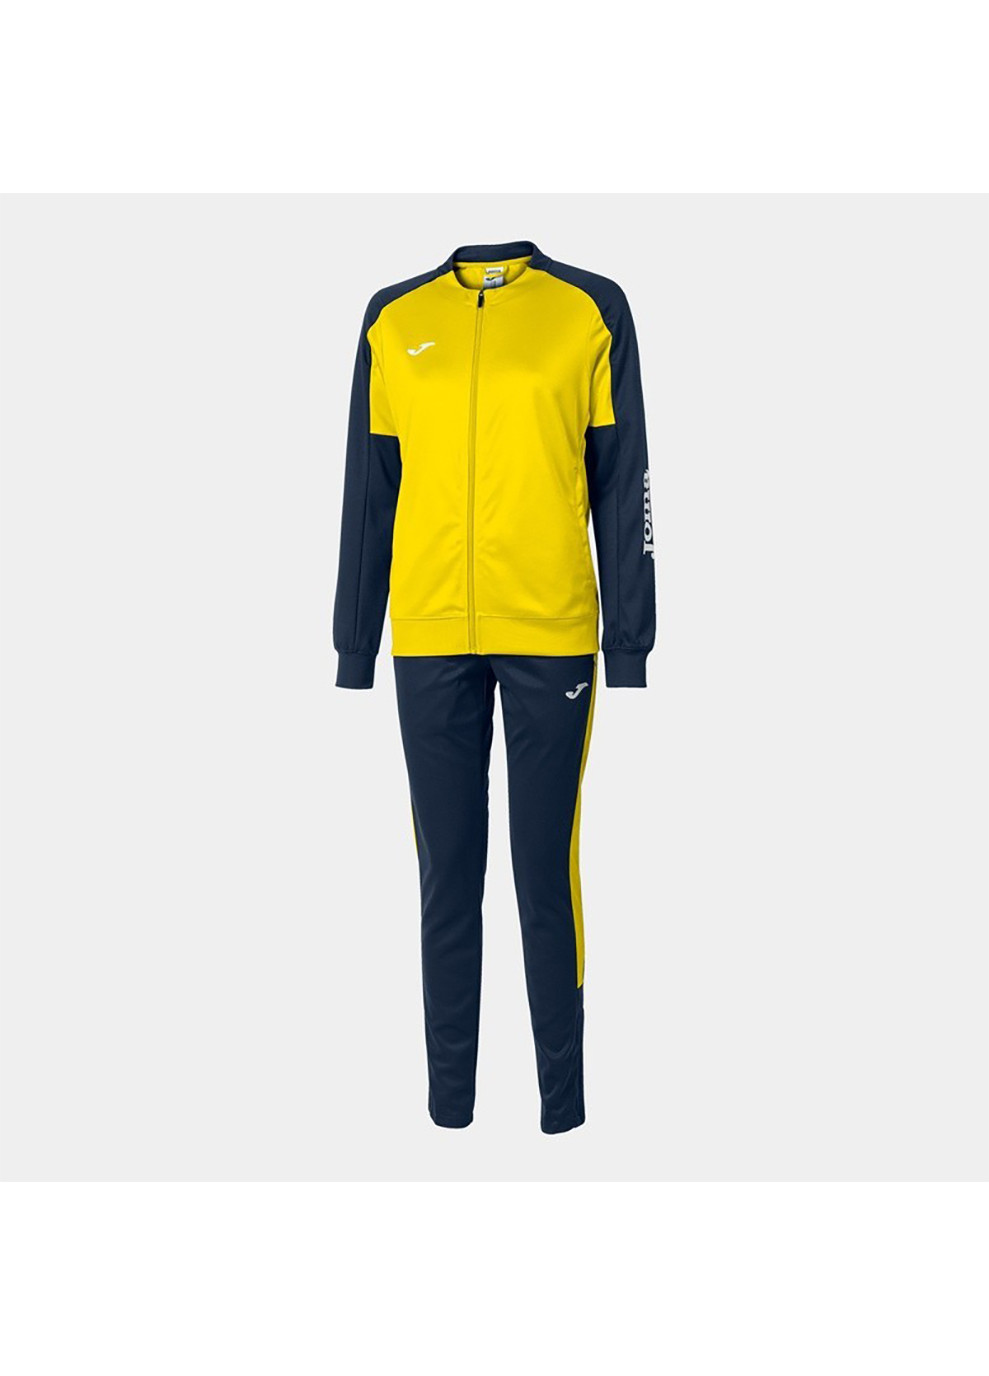 Женский спортивный костюм ECO CHAMPIONSHIP TRACKSUIT желтый,синий Joma (260956013)